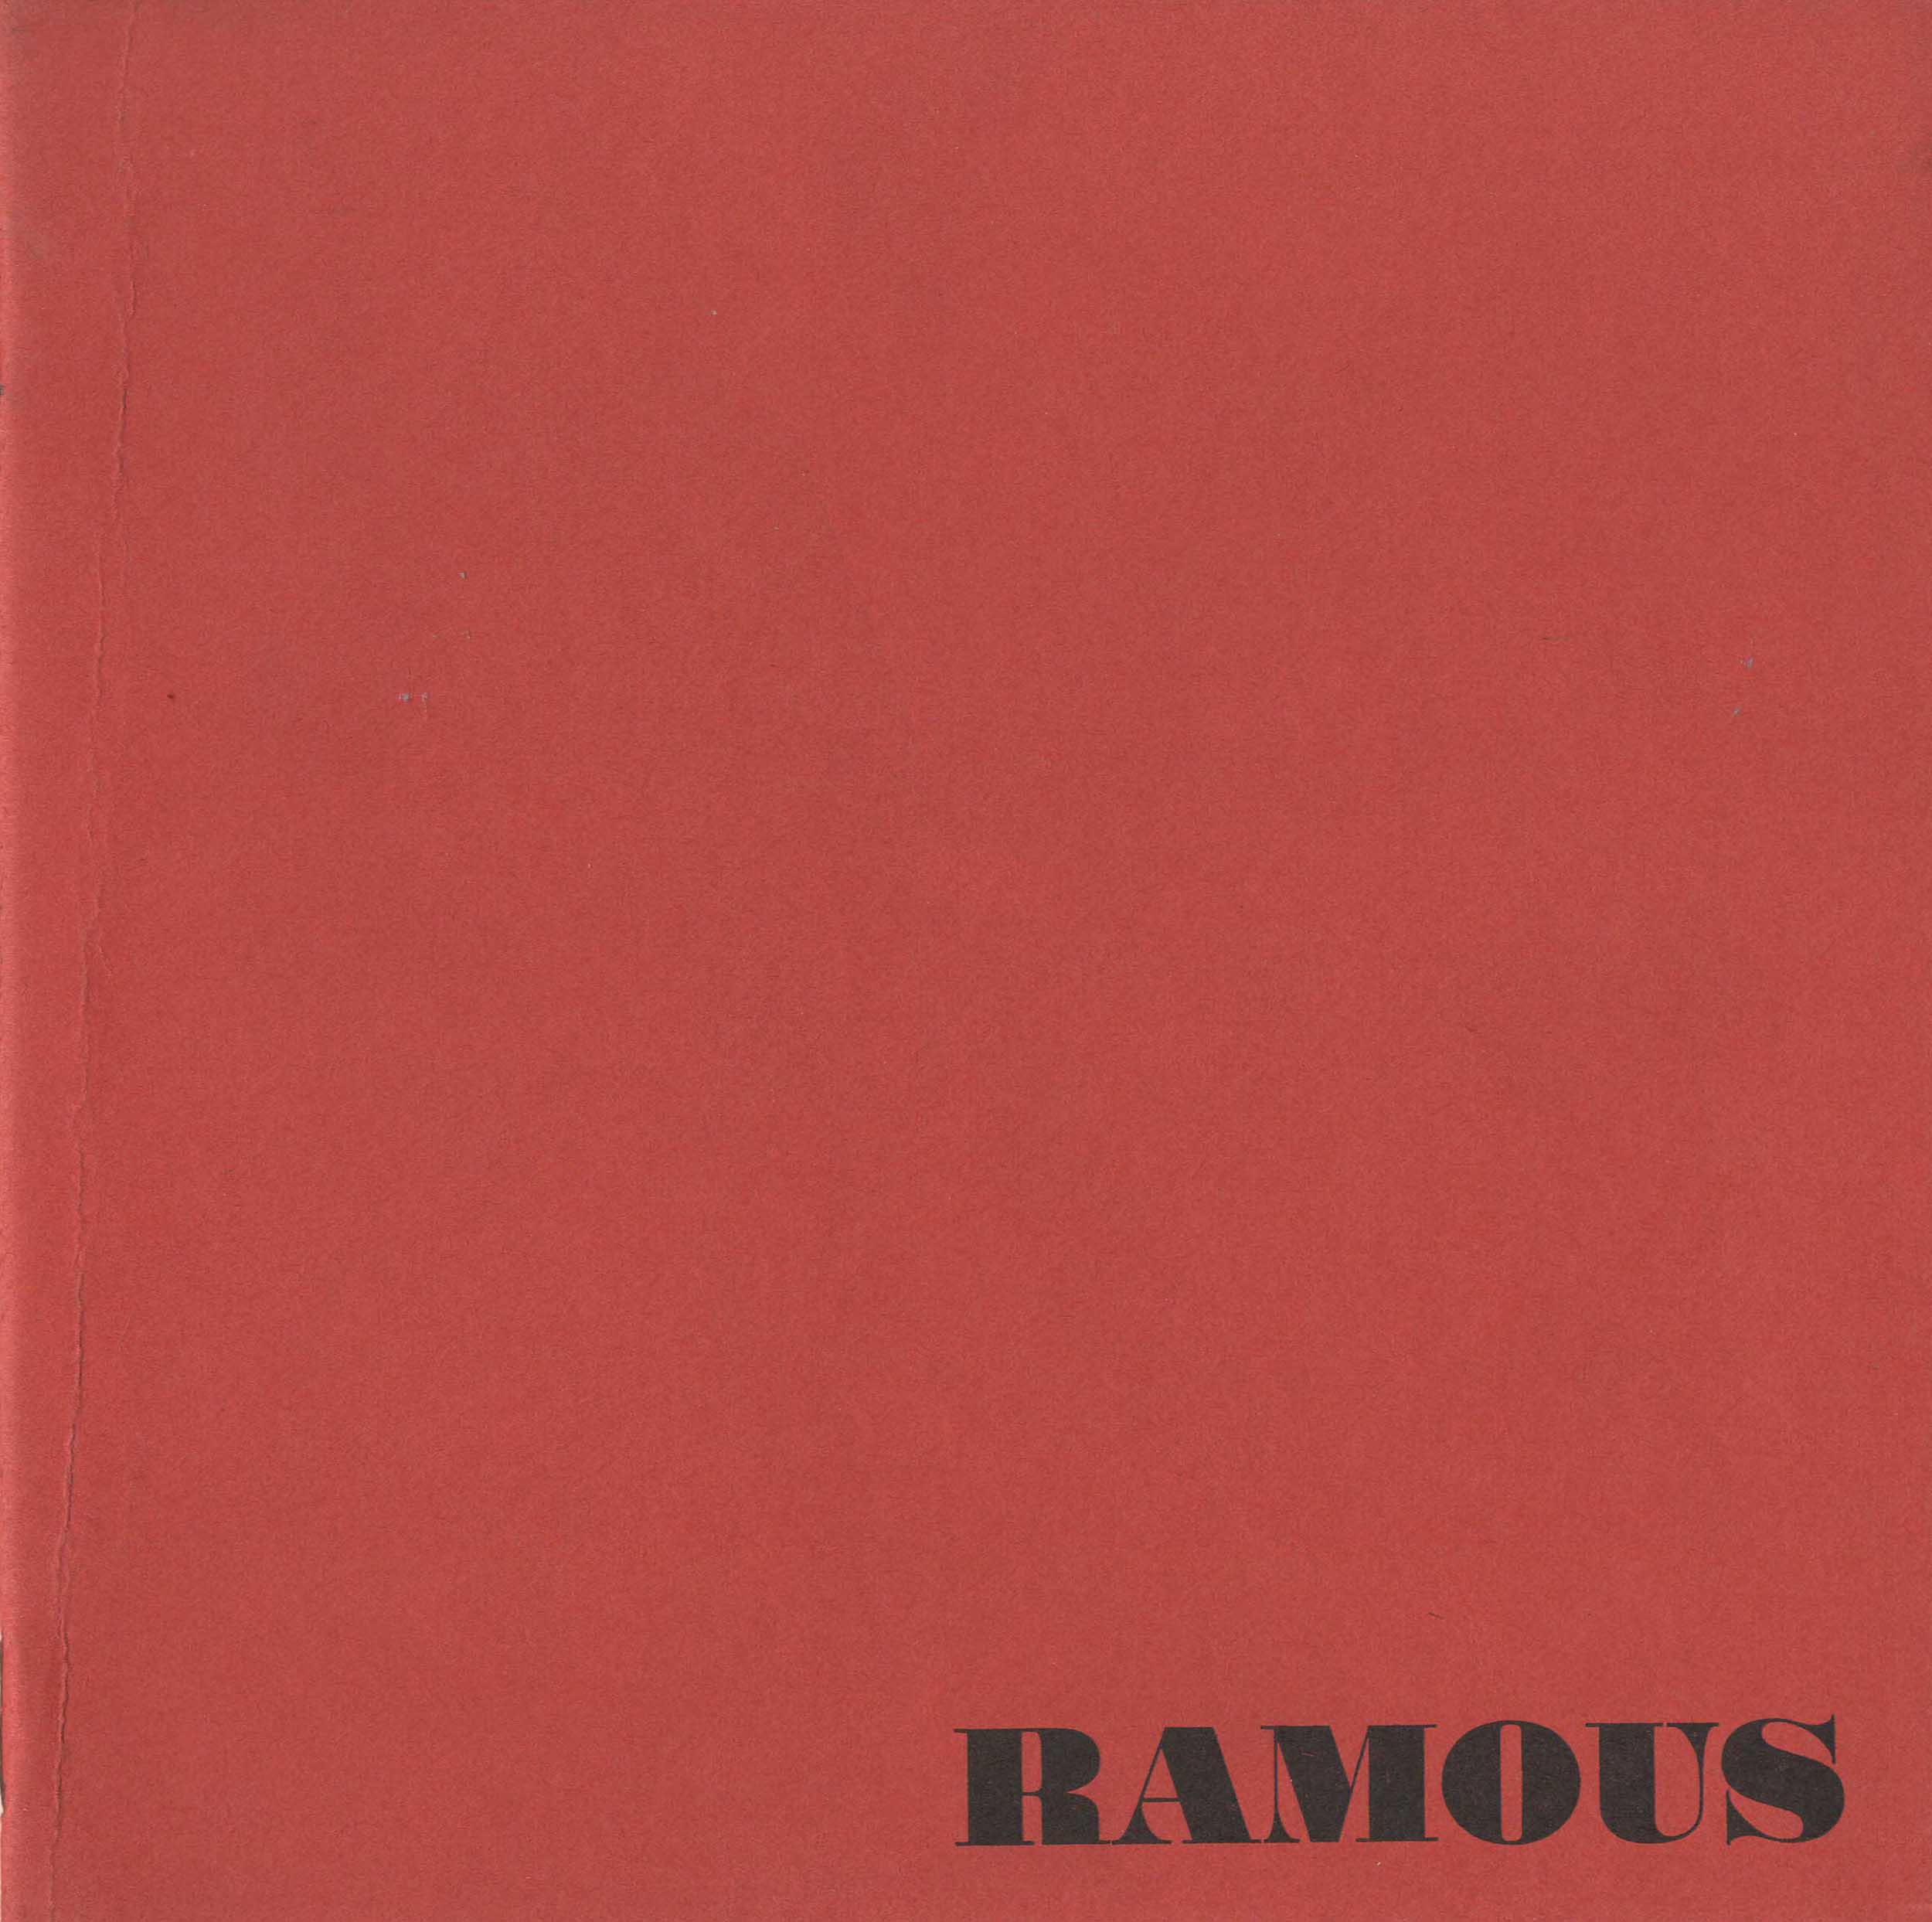 Ramous – Galleria Goethe